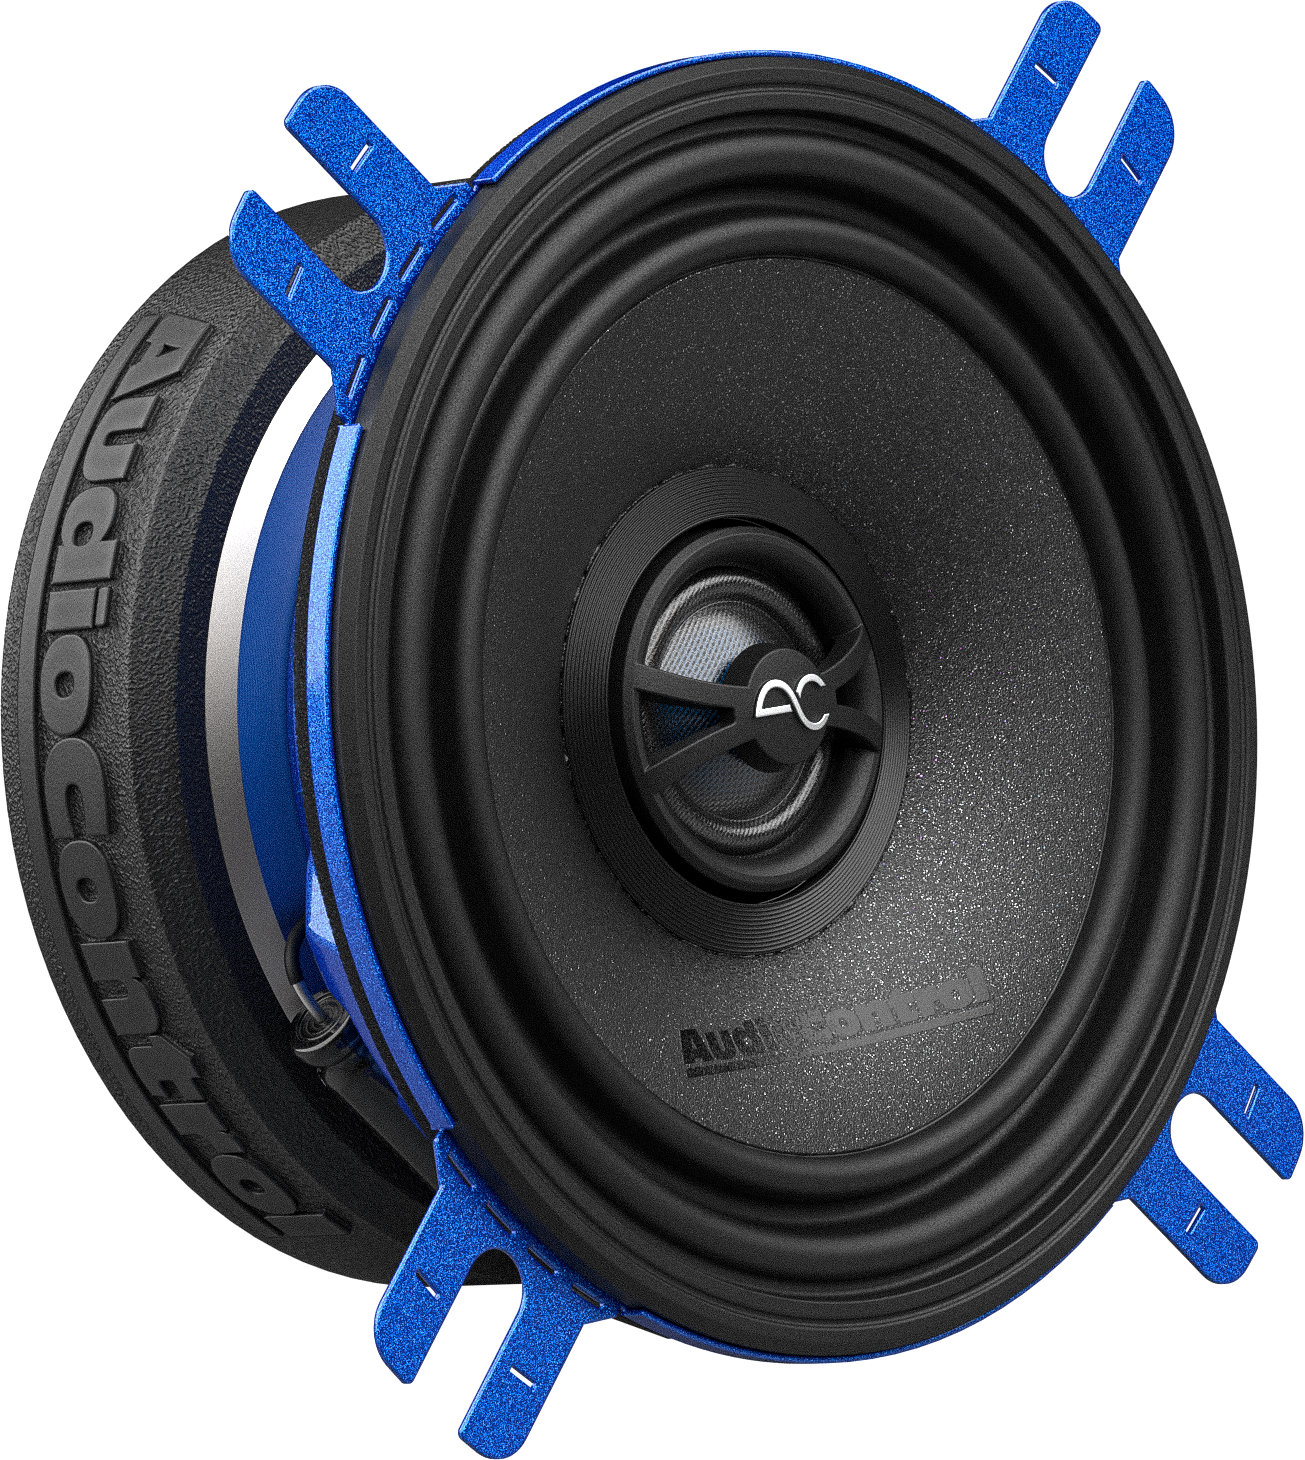 AudioControl PNW Series Car Speakers, 3.5" Coaxial High-Fidelity, 25 Watt RMS/50 Watt Max, 2 Ohm (Pair)